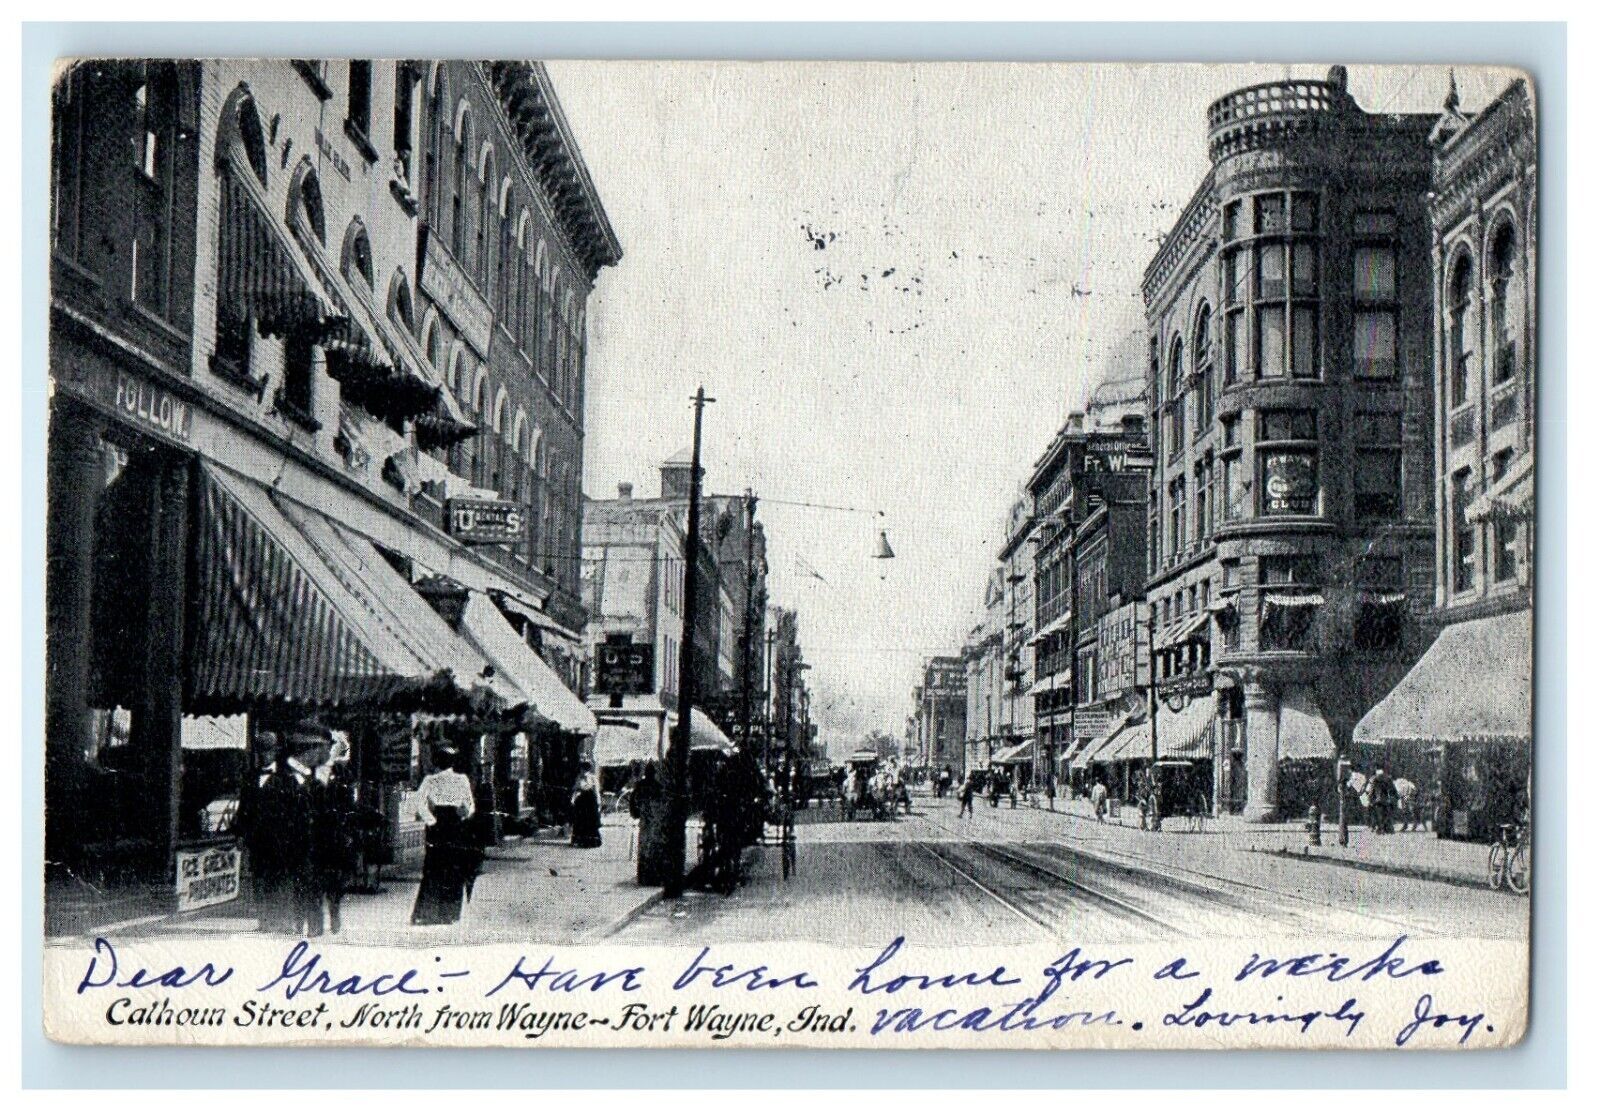 1907 Calhoun Street North From Wayne Fort Wayne Indiana IN Antique Postcard